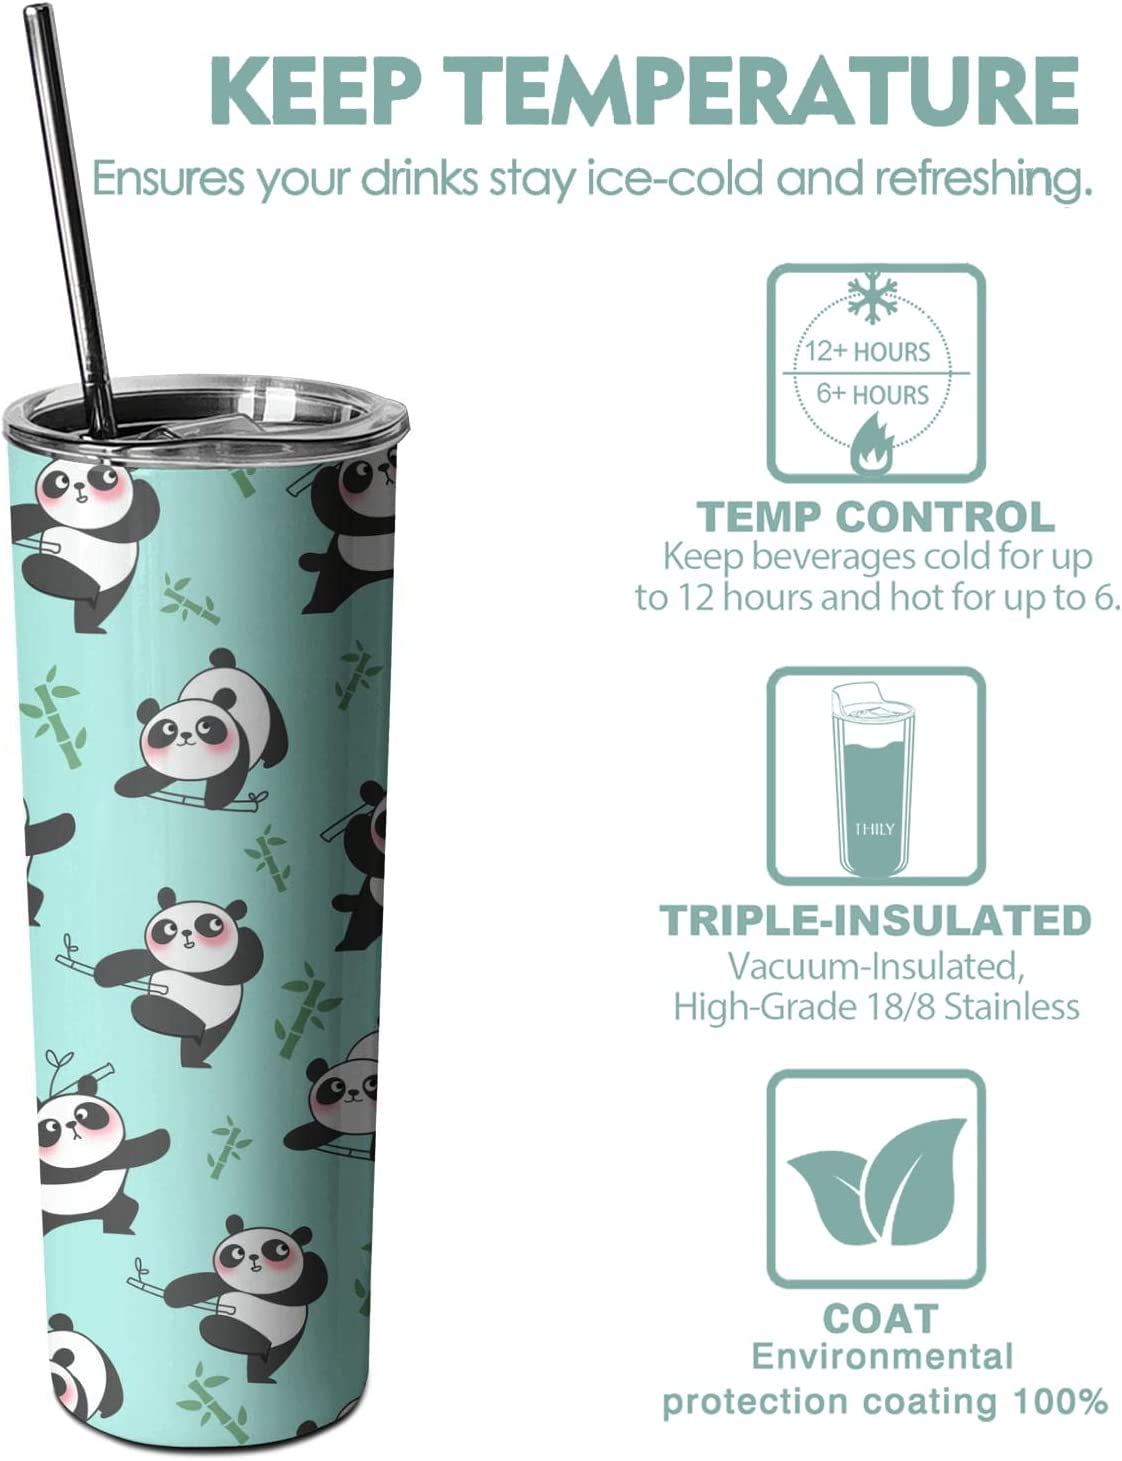 Panda's Life - Cute Panda Travel Coffee Mug for Women Men Thermal Tumbler  with , Lid and Stainless Steel Interior 20 OZ 41019 41020